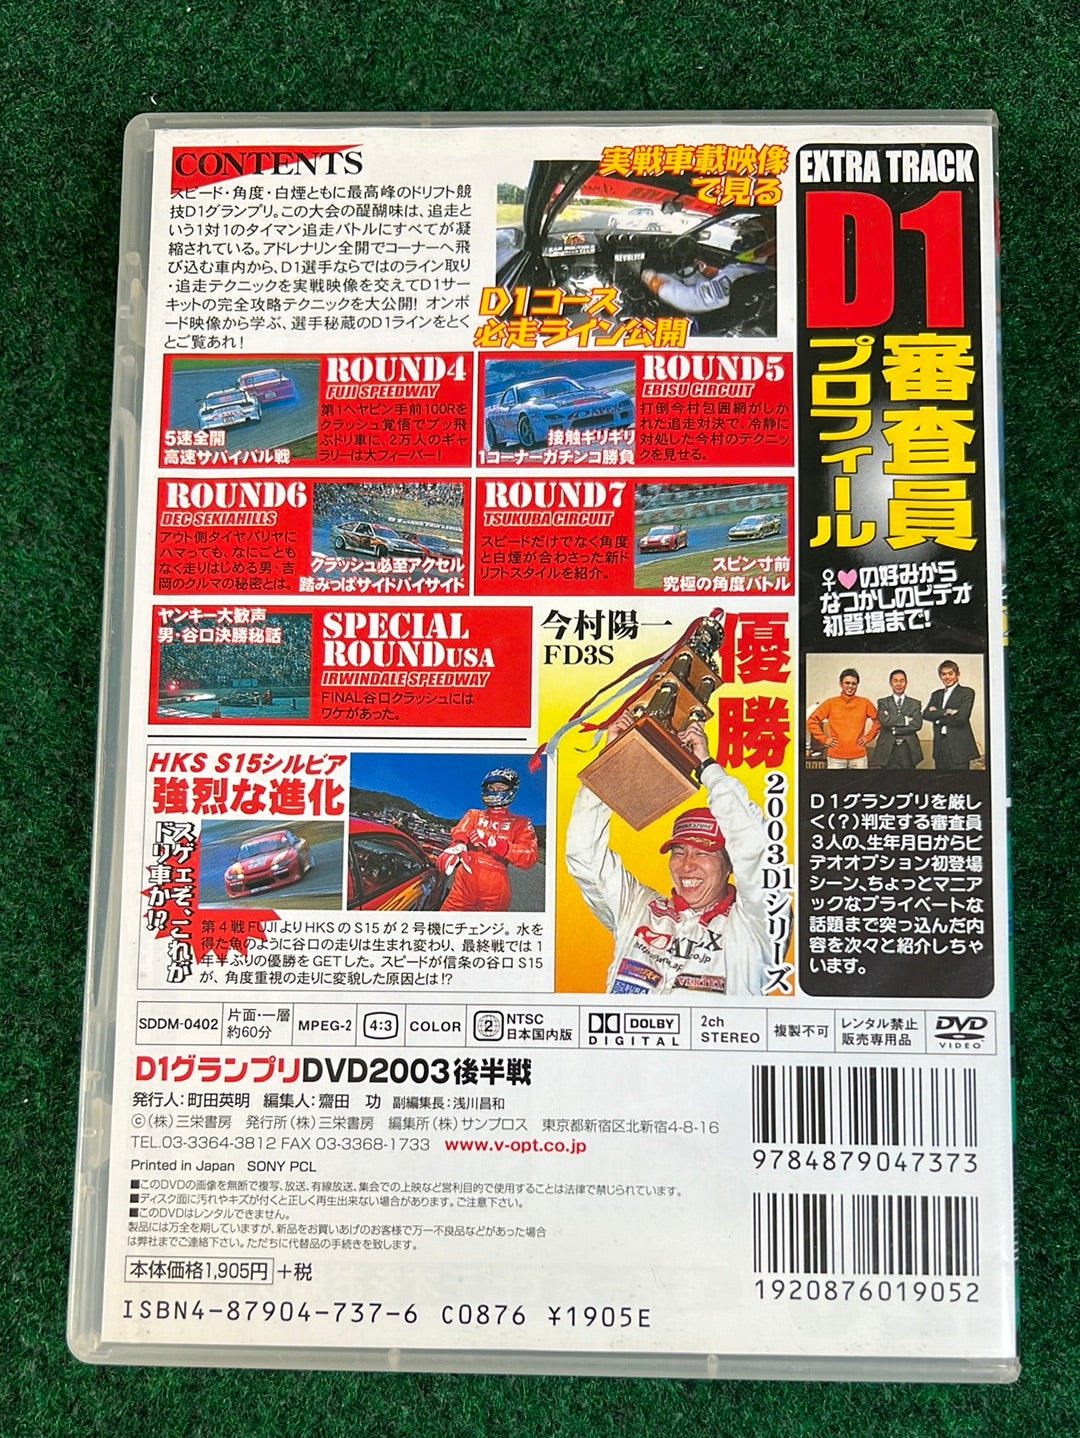 Option Video DVD - 2003 D1 Grand Prix Series Rd. 4-7 & USA DVD